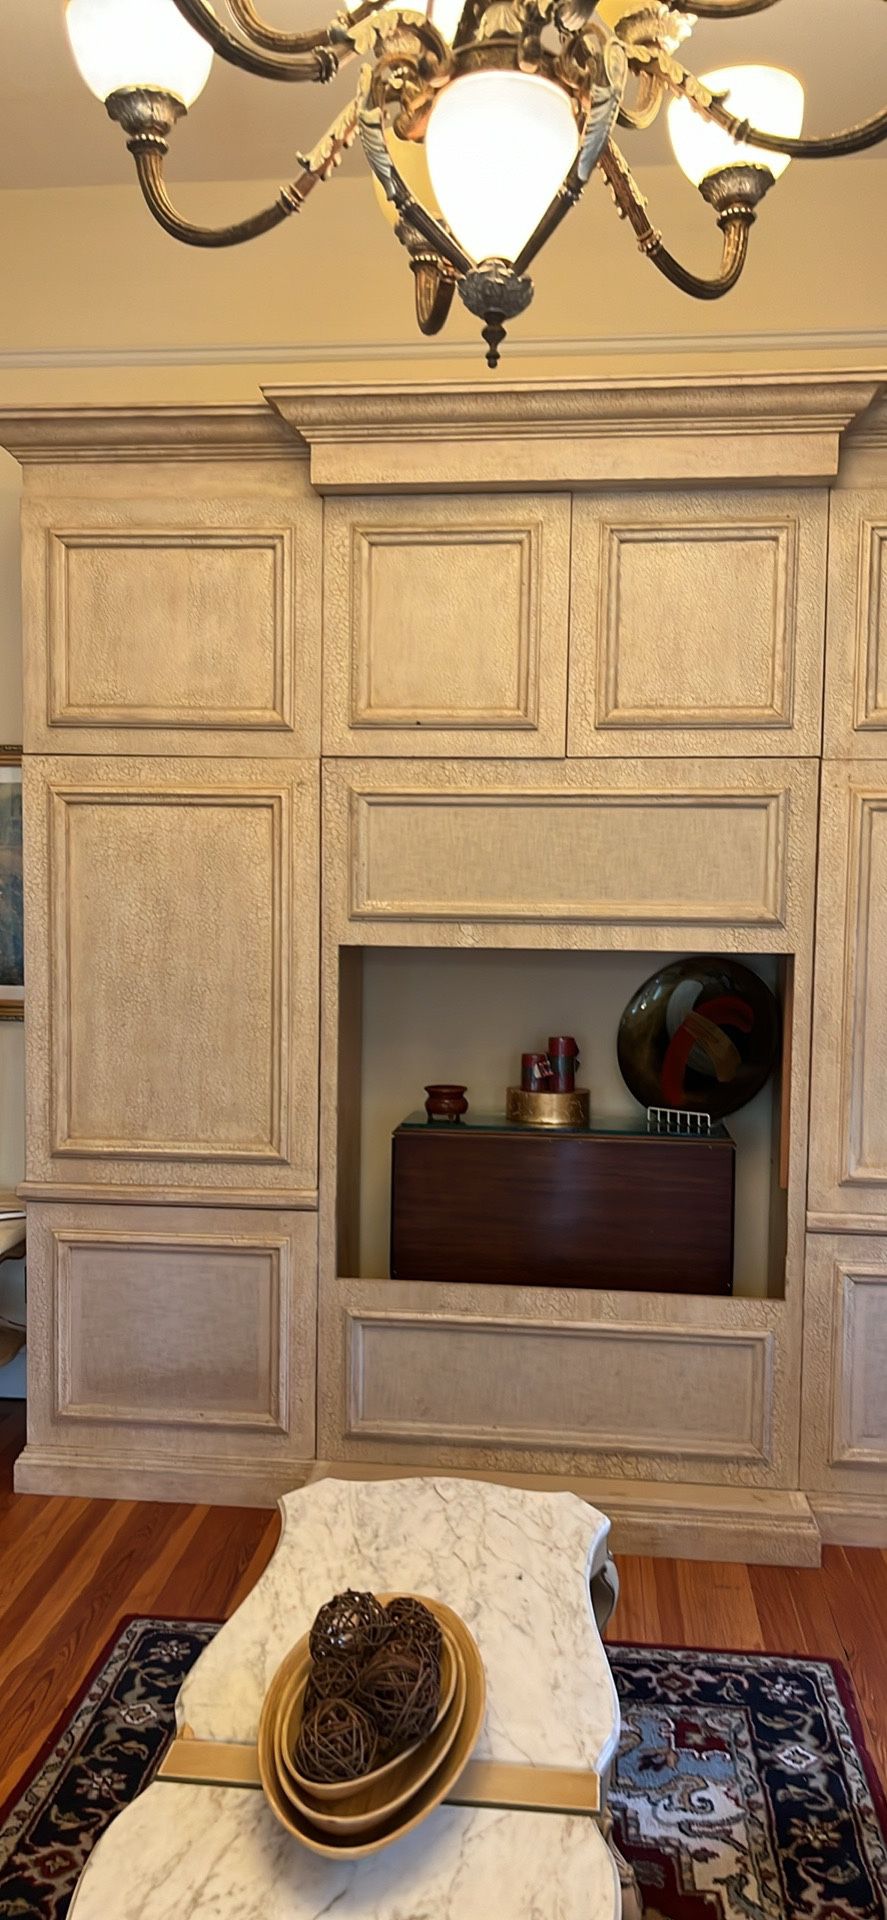 Large Cabinet